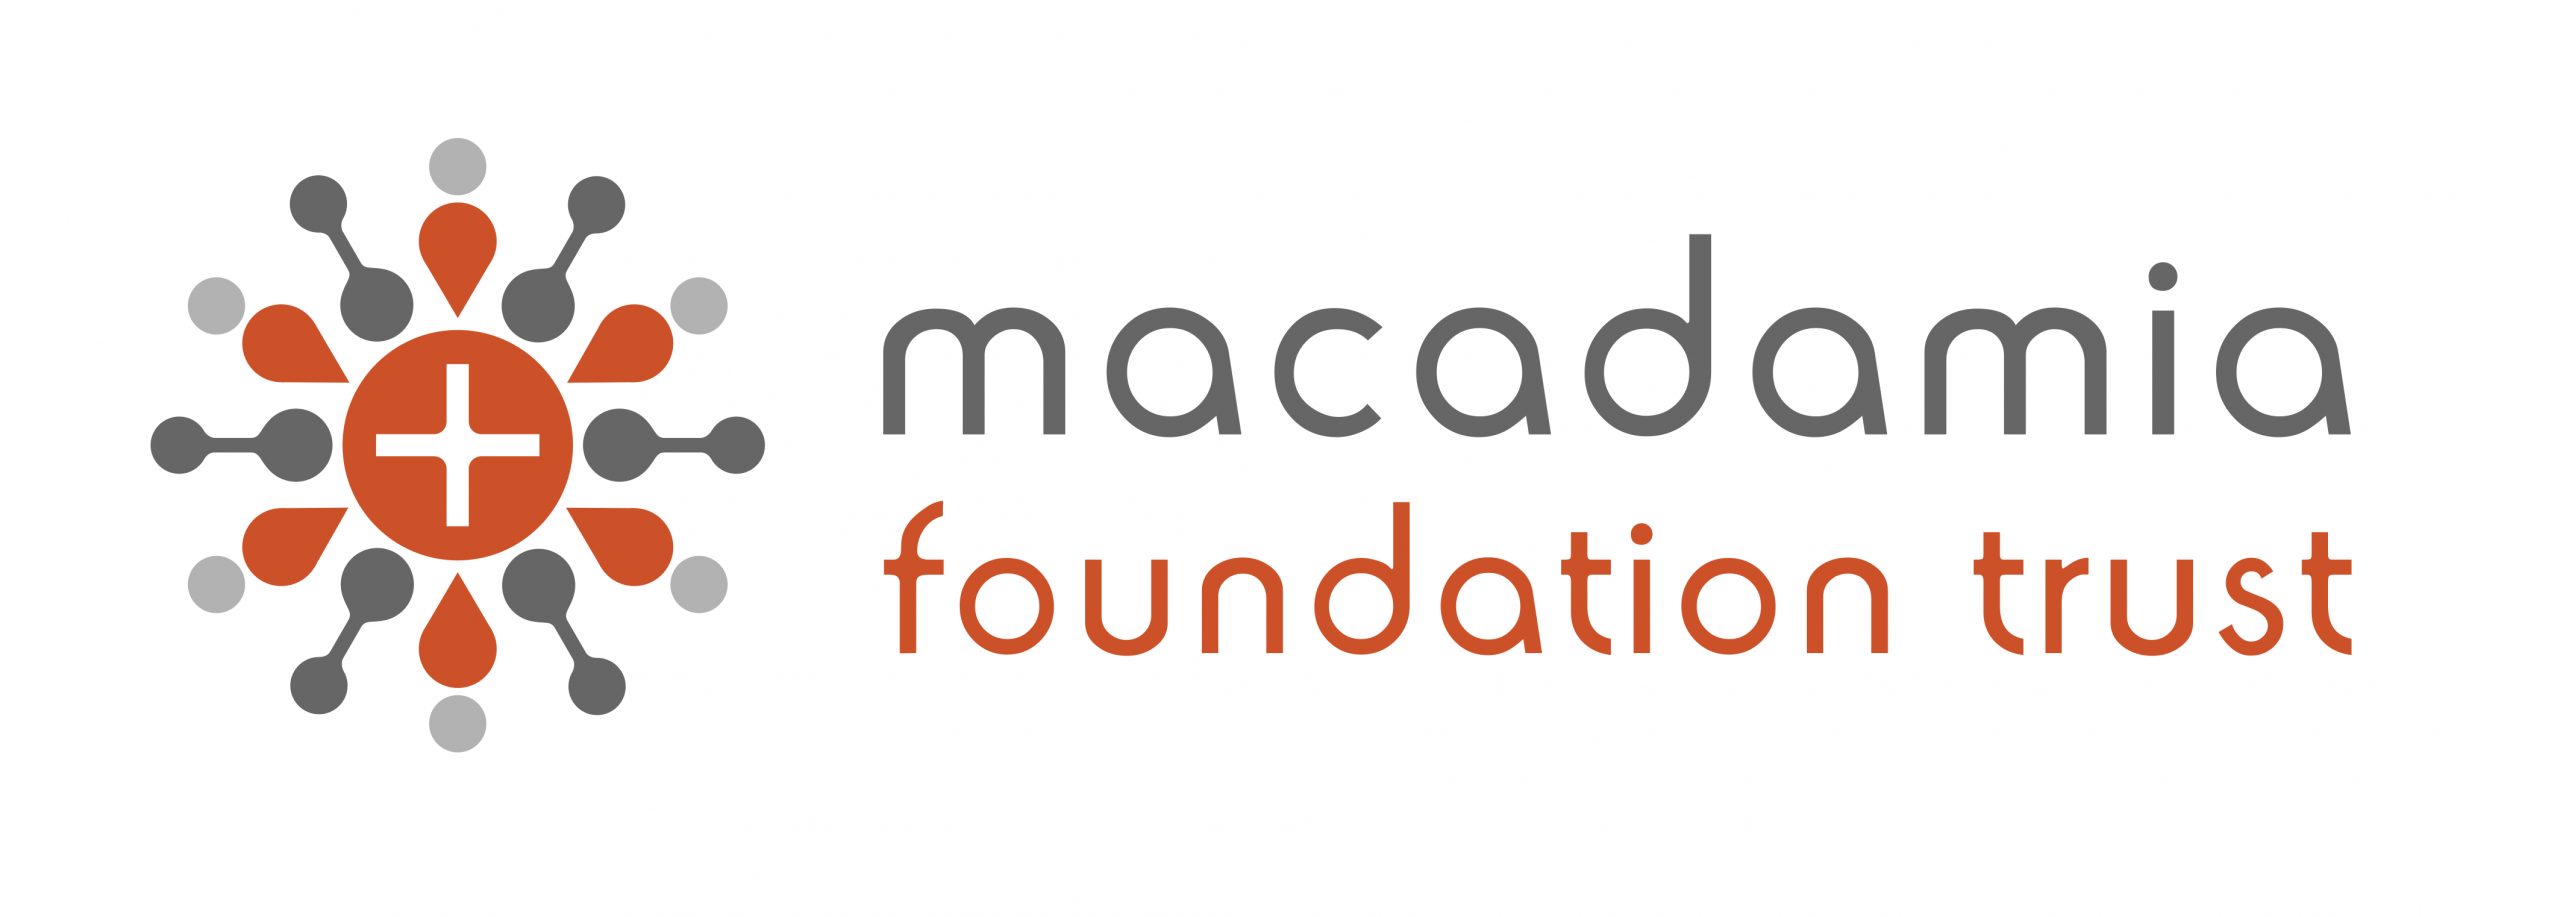 Macadamia-Foundation-Trust-scaled.jpg